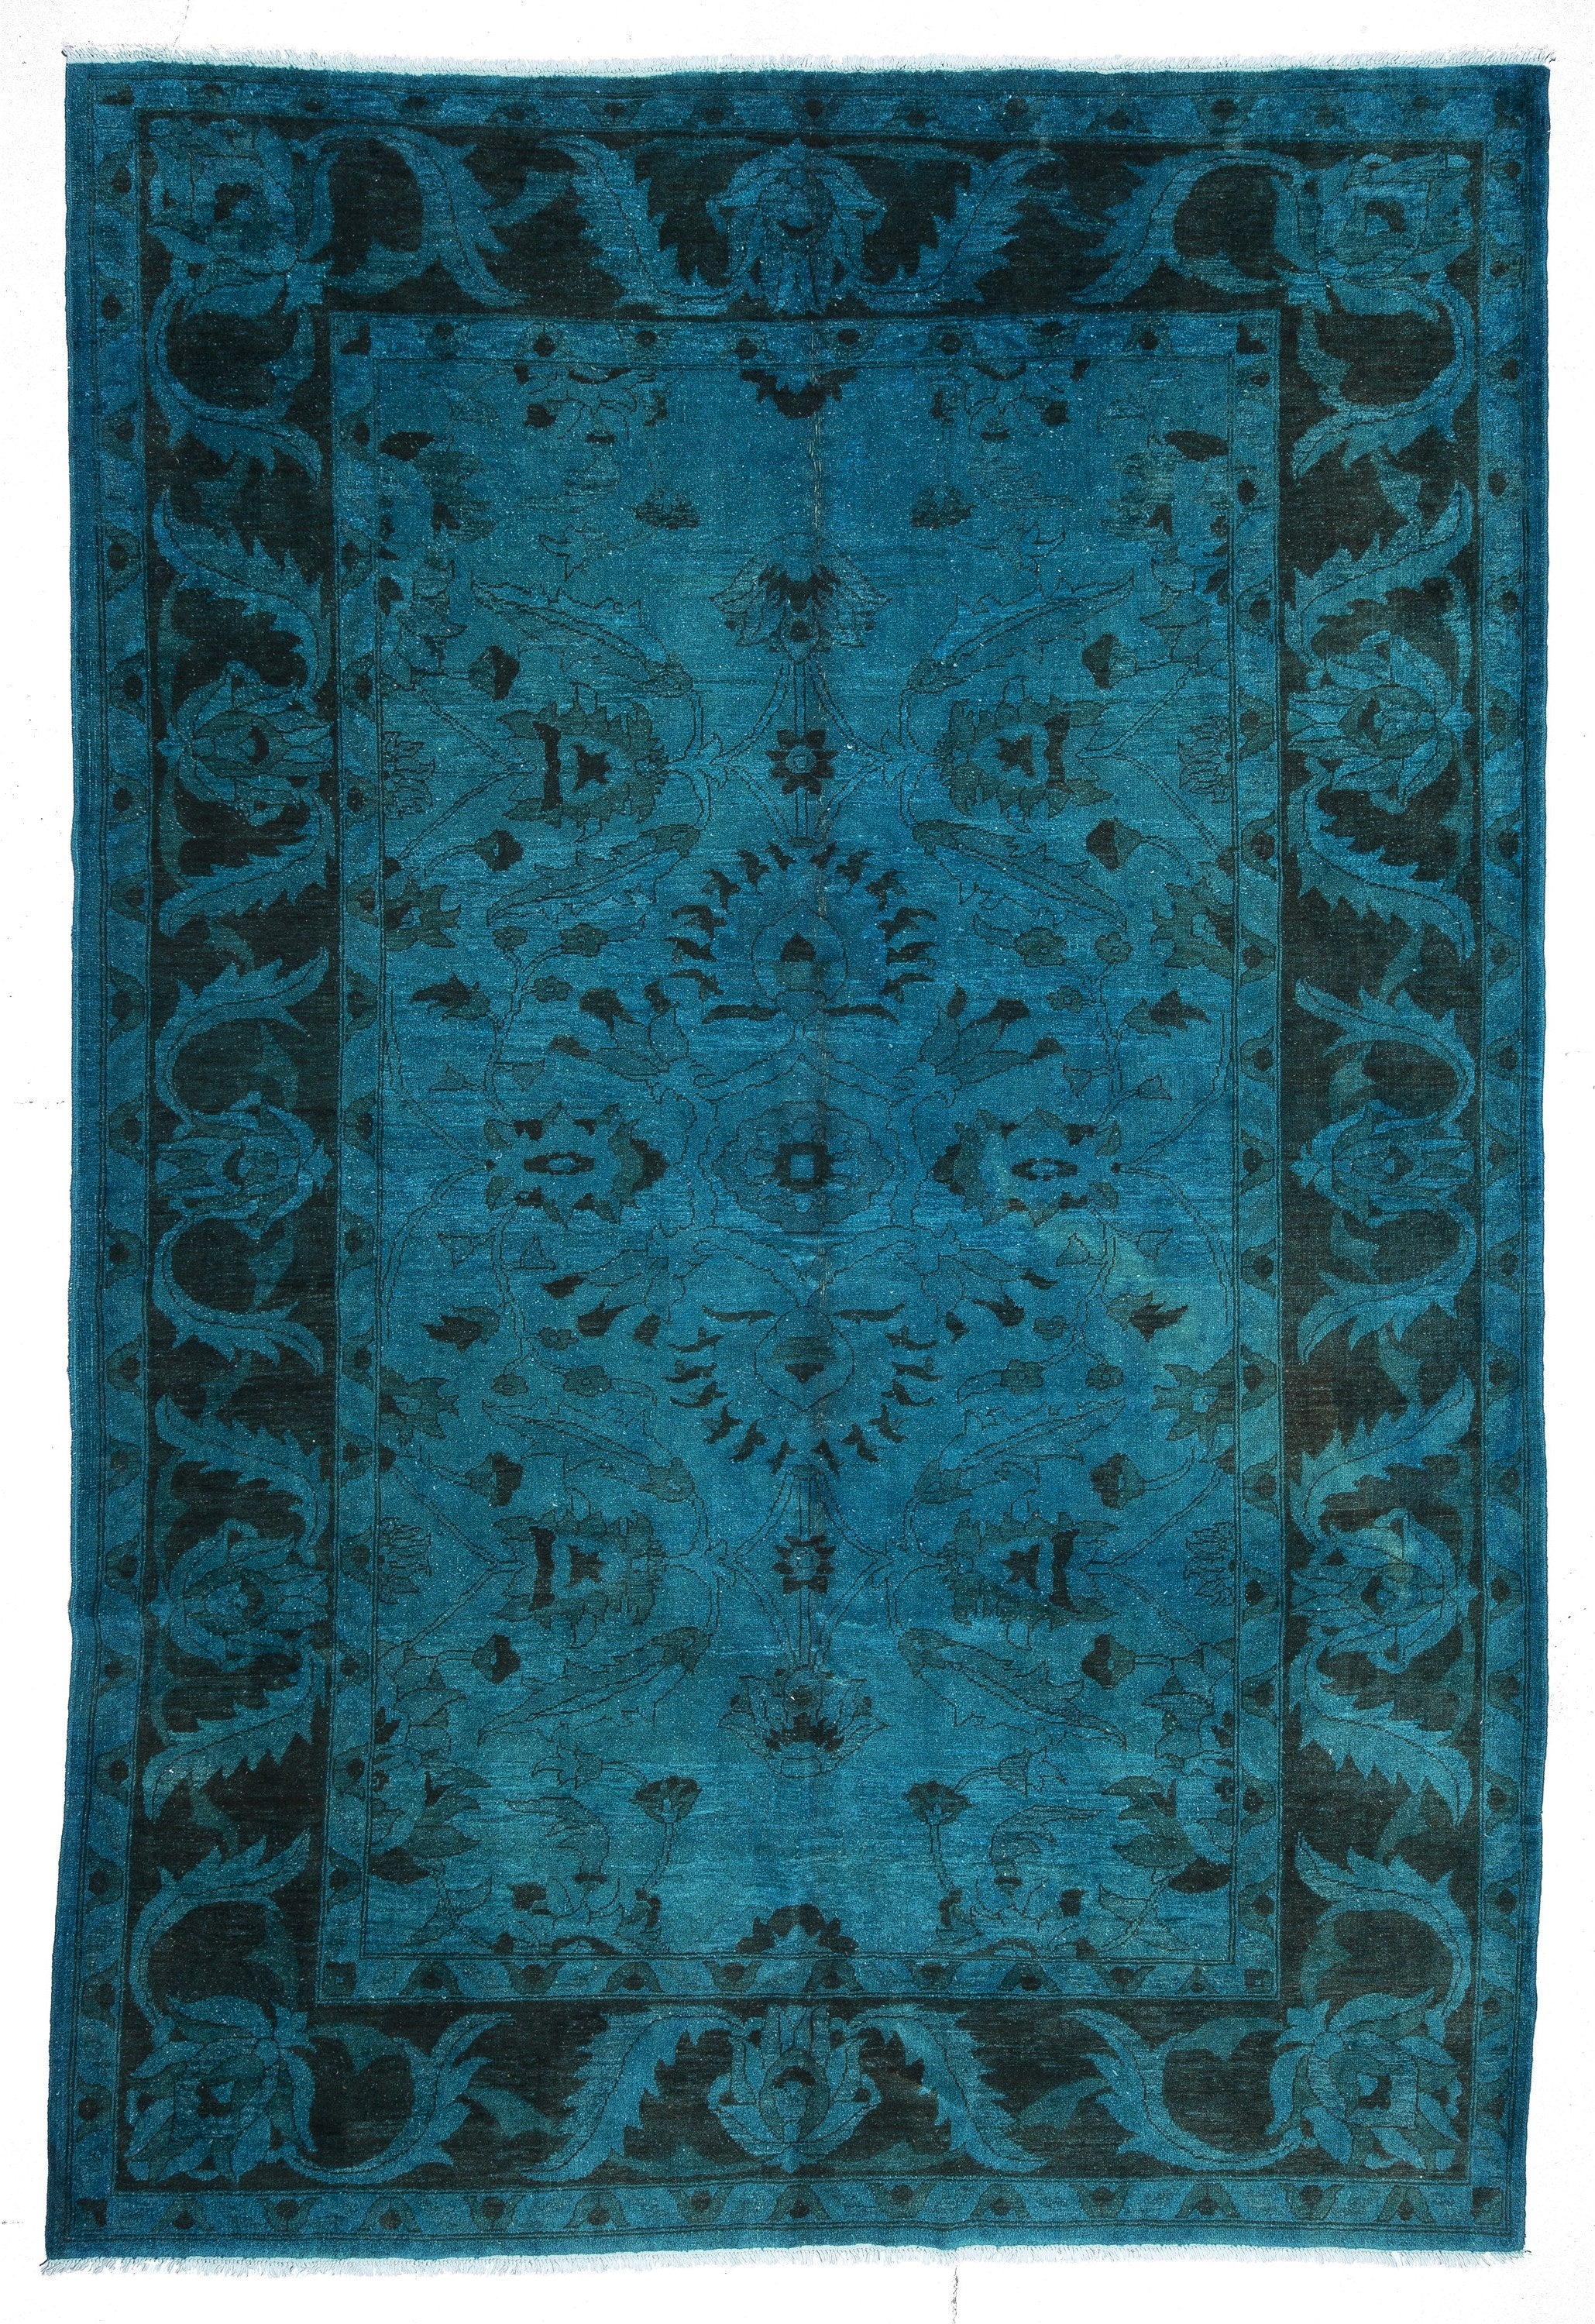 Turquoise Blue Rustic Rug, Overdyed Vintage Rug, Bohemian Decor Handwoven Wool Living Room Rug, Oriental Design Persian AreaRug, 9'10"x6'7"